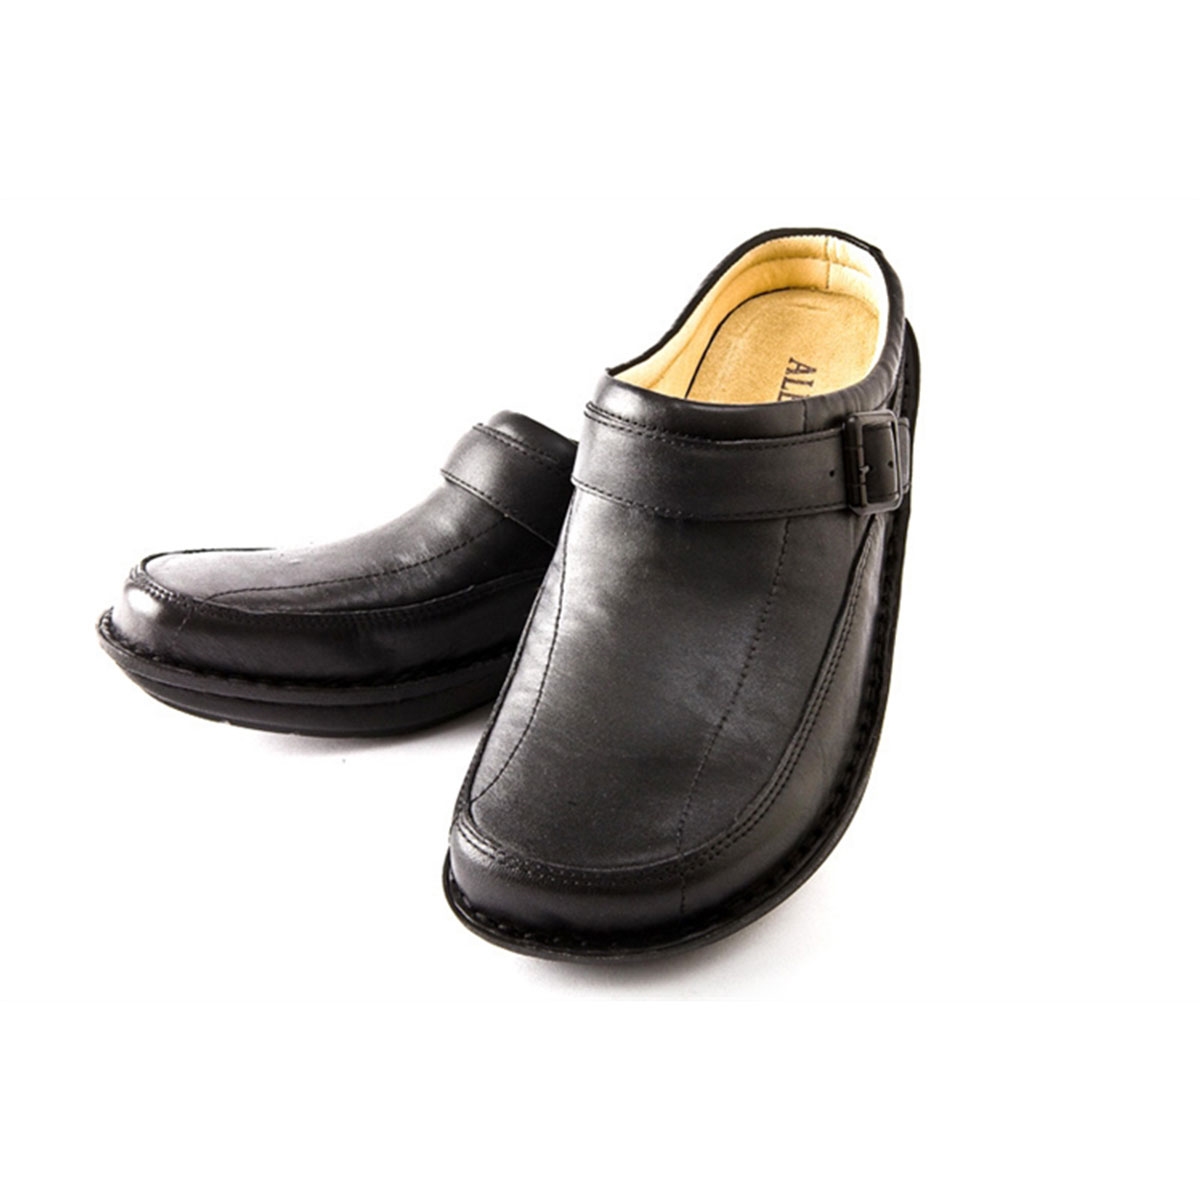 Alegria Men's Chairman Black Nappa | Alegria Shoes